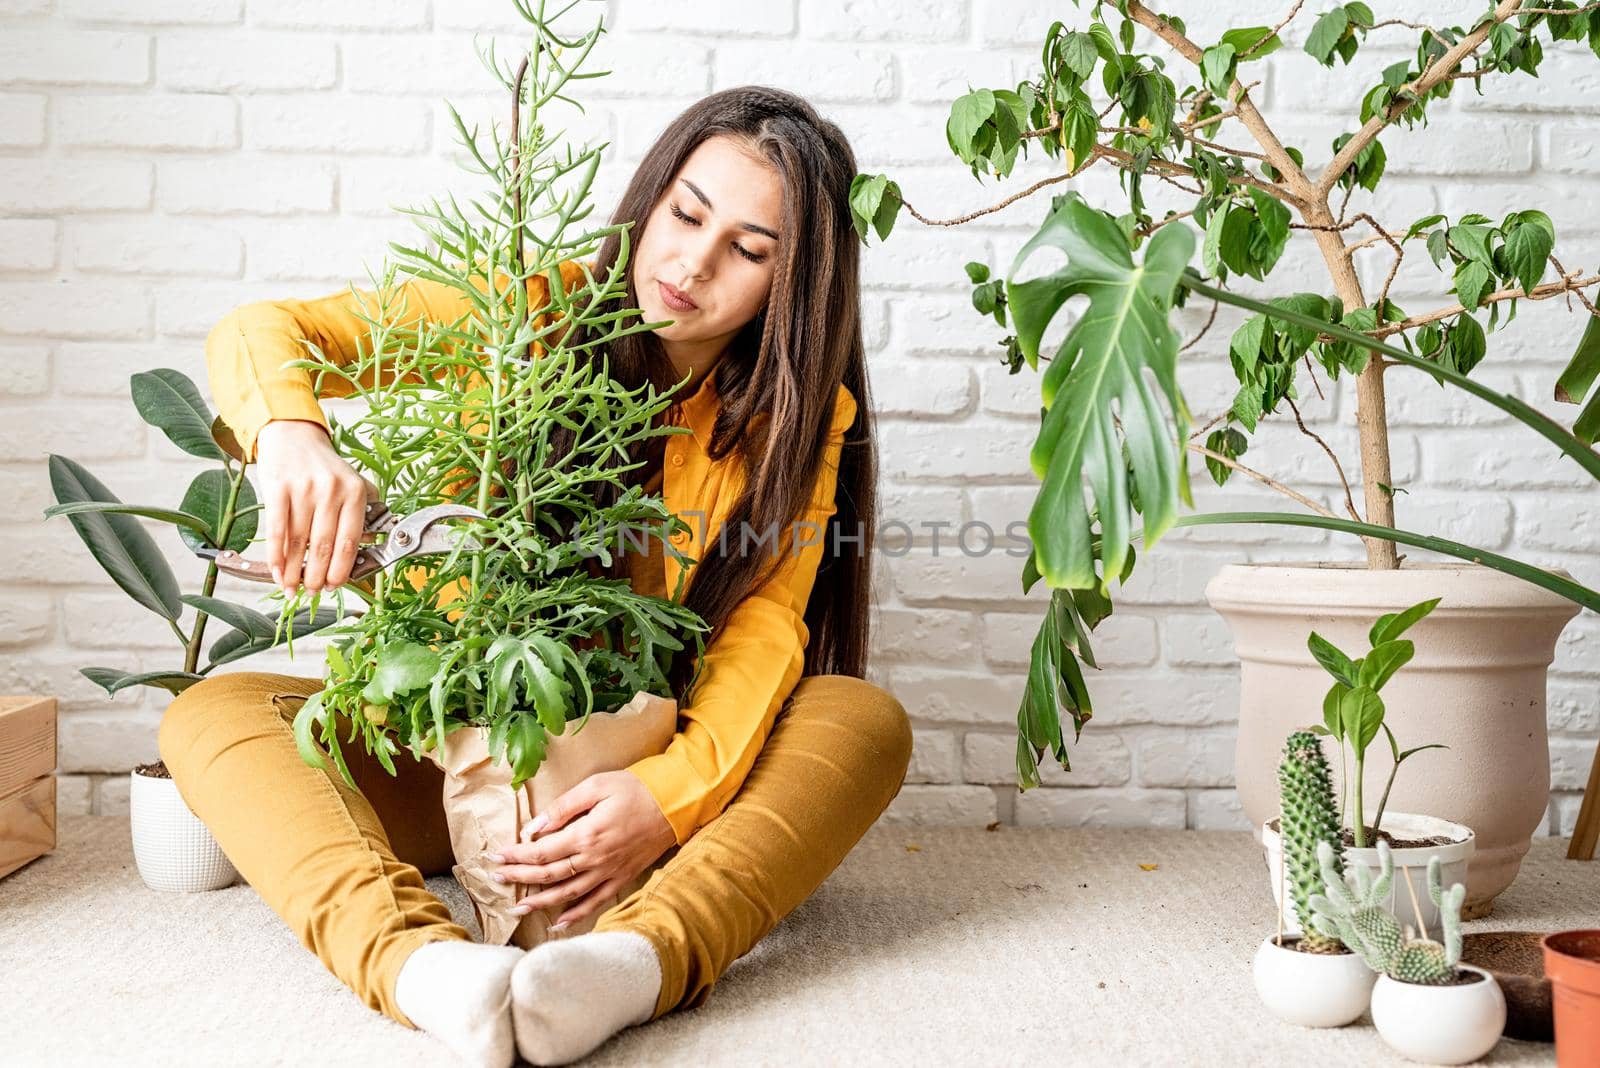 Woman gardener taking care of her home garden plants by Desperada